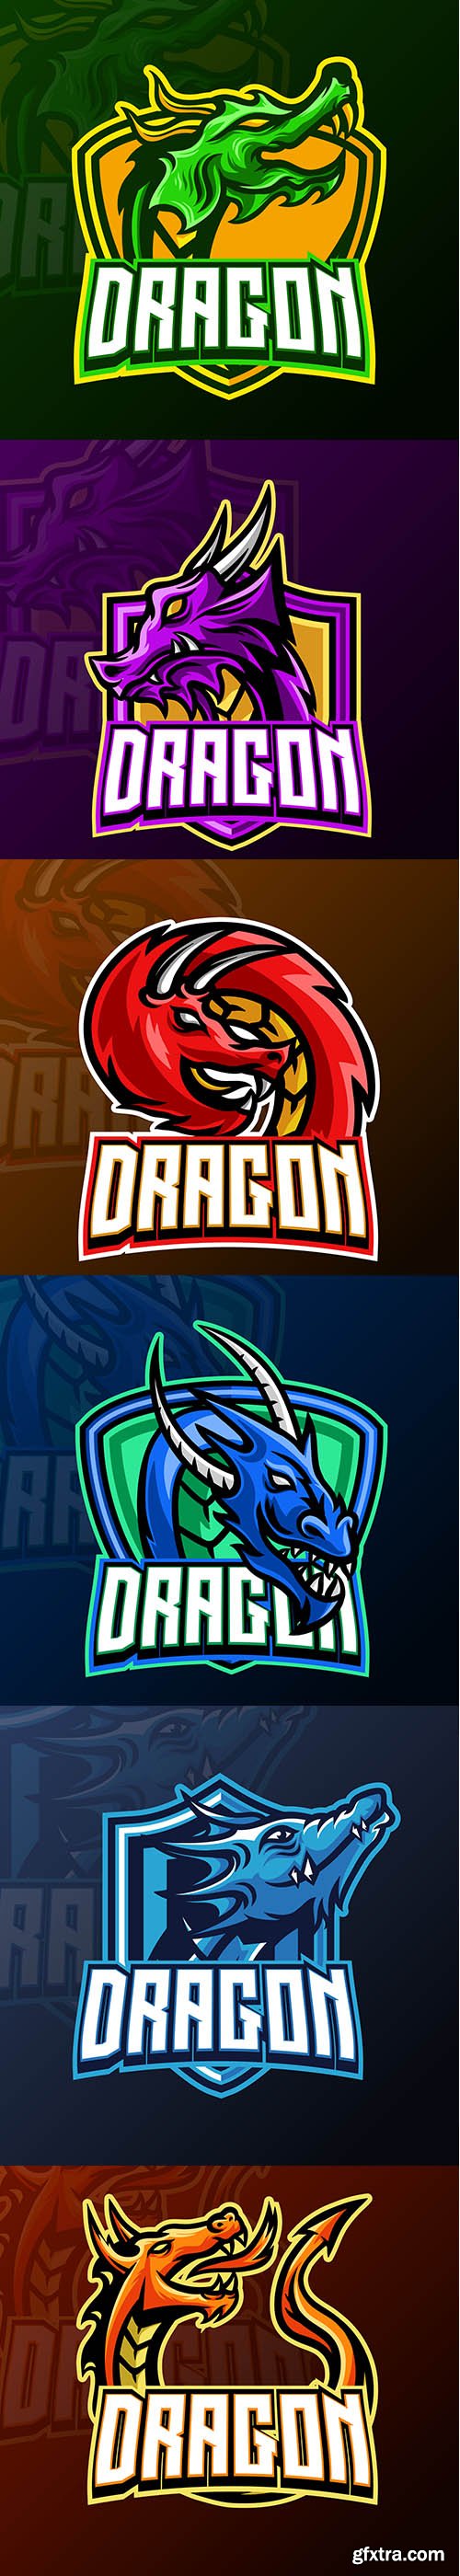 Dragon Mascot Gaming Logo Design Template